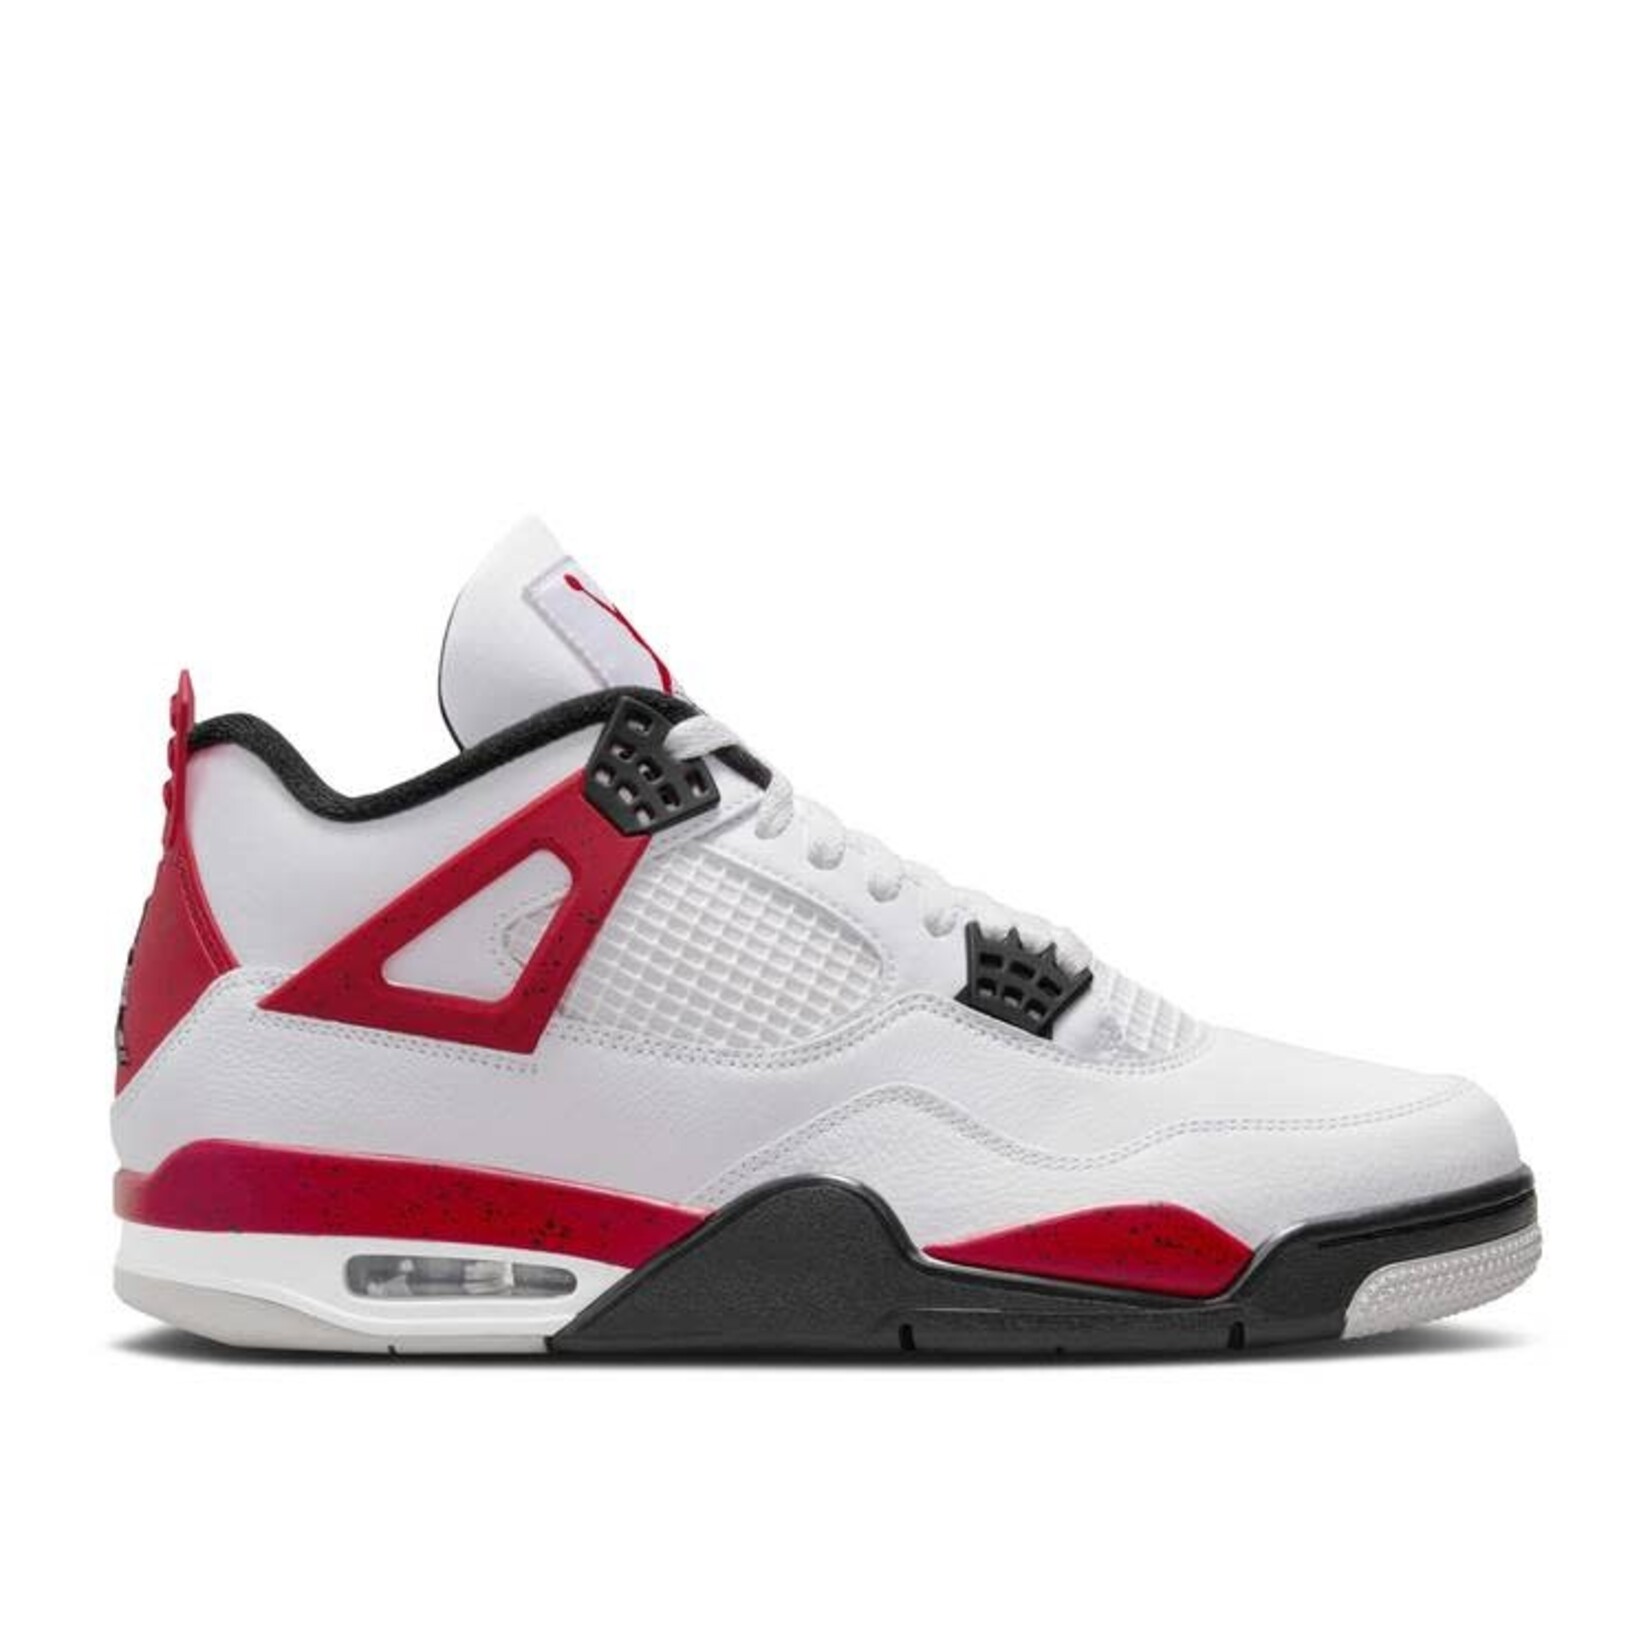 Jordan Jordan 4 Retro Red Cement Size 10, DS BRAND NEW